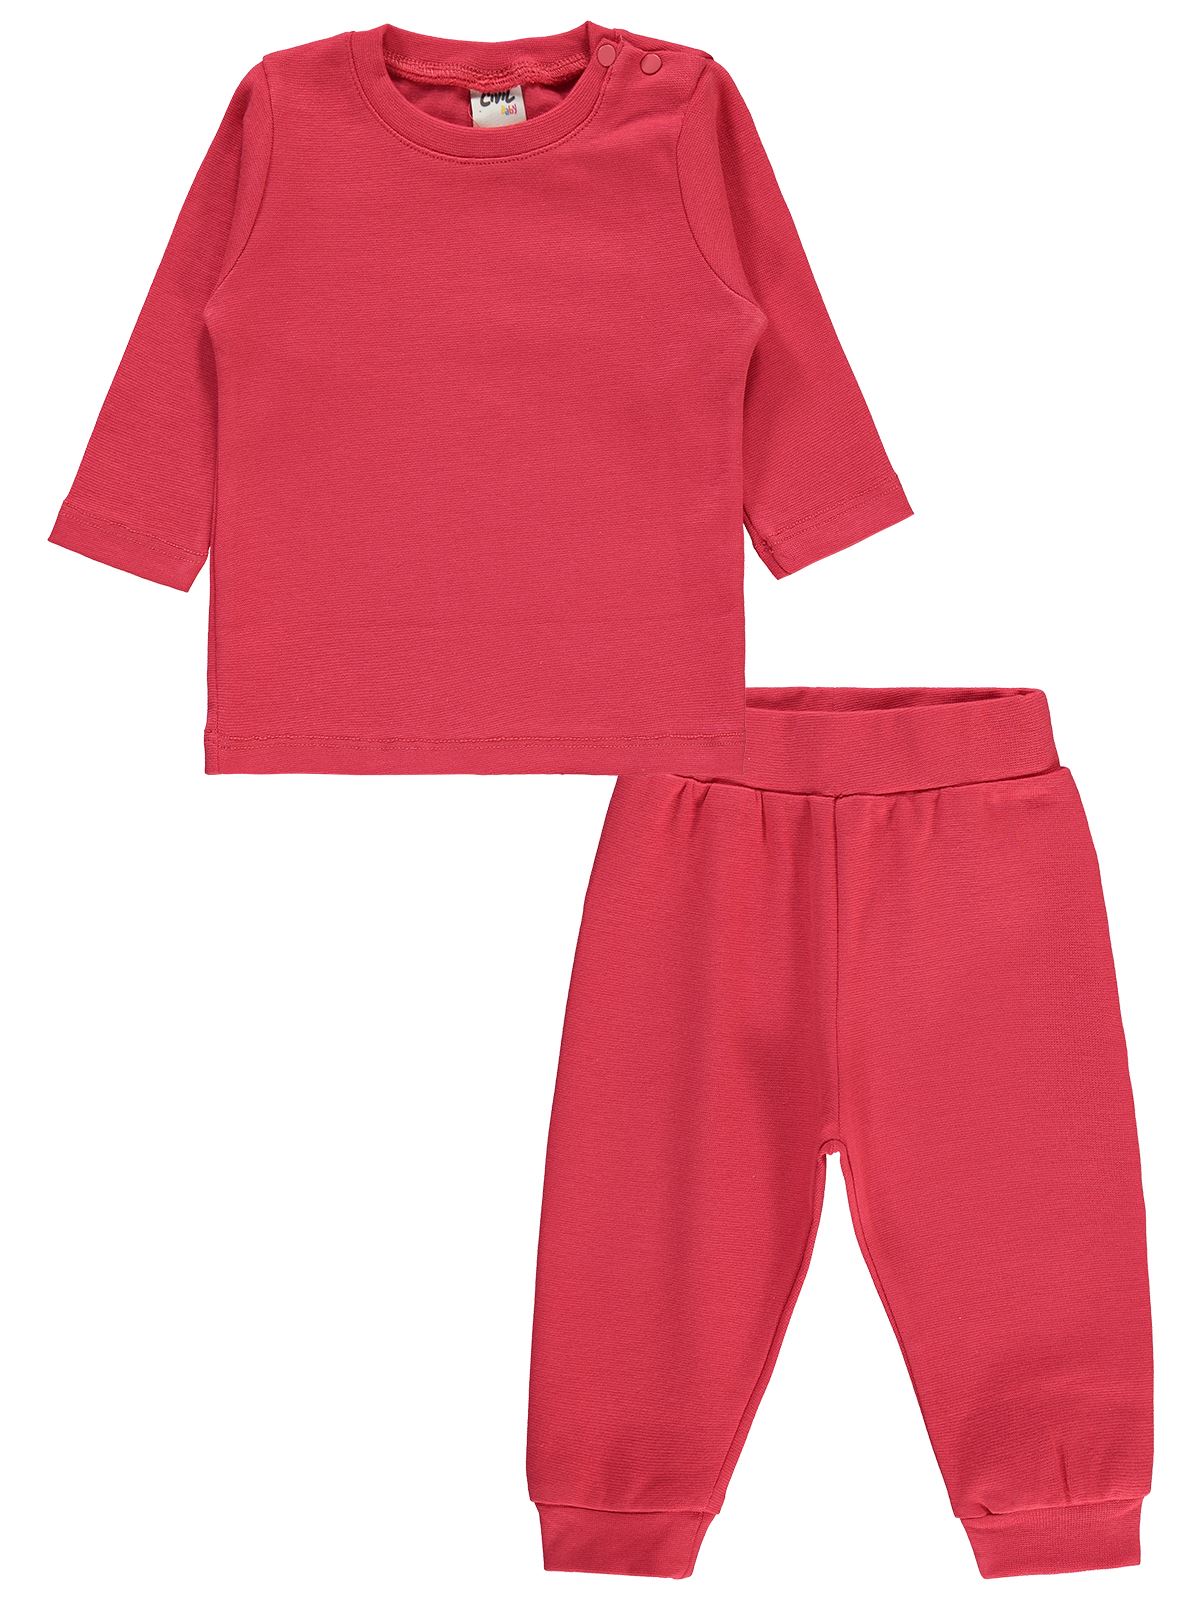 Civil Baby Bebek Pijama Takımı 6-18 Ay Narçiçeği